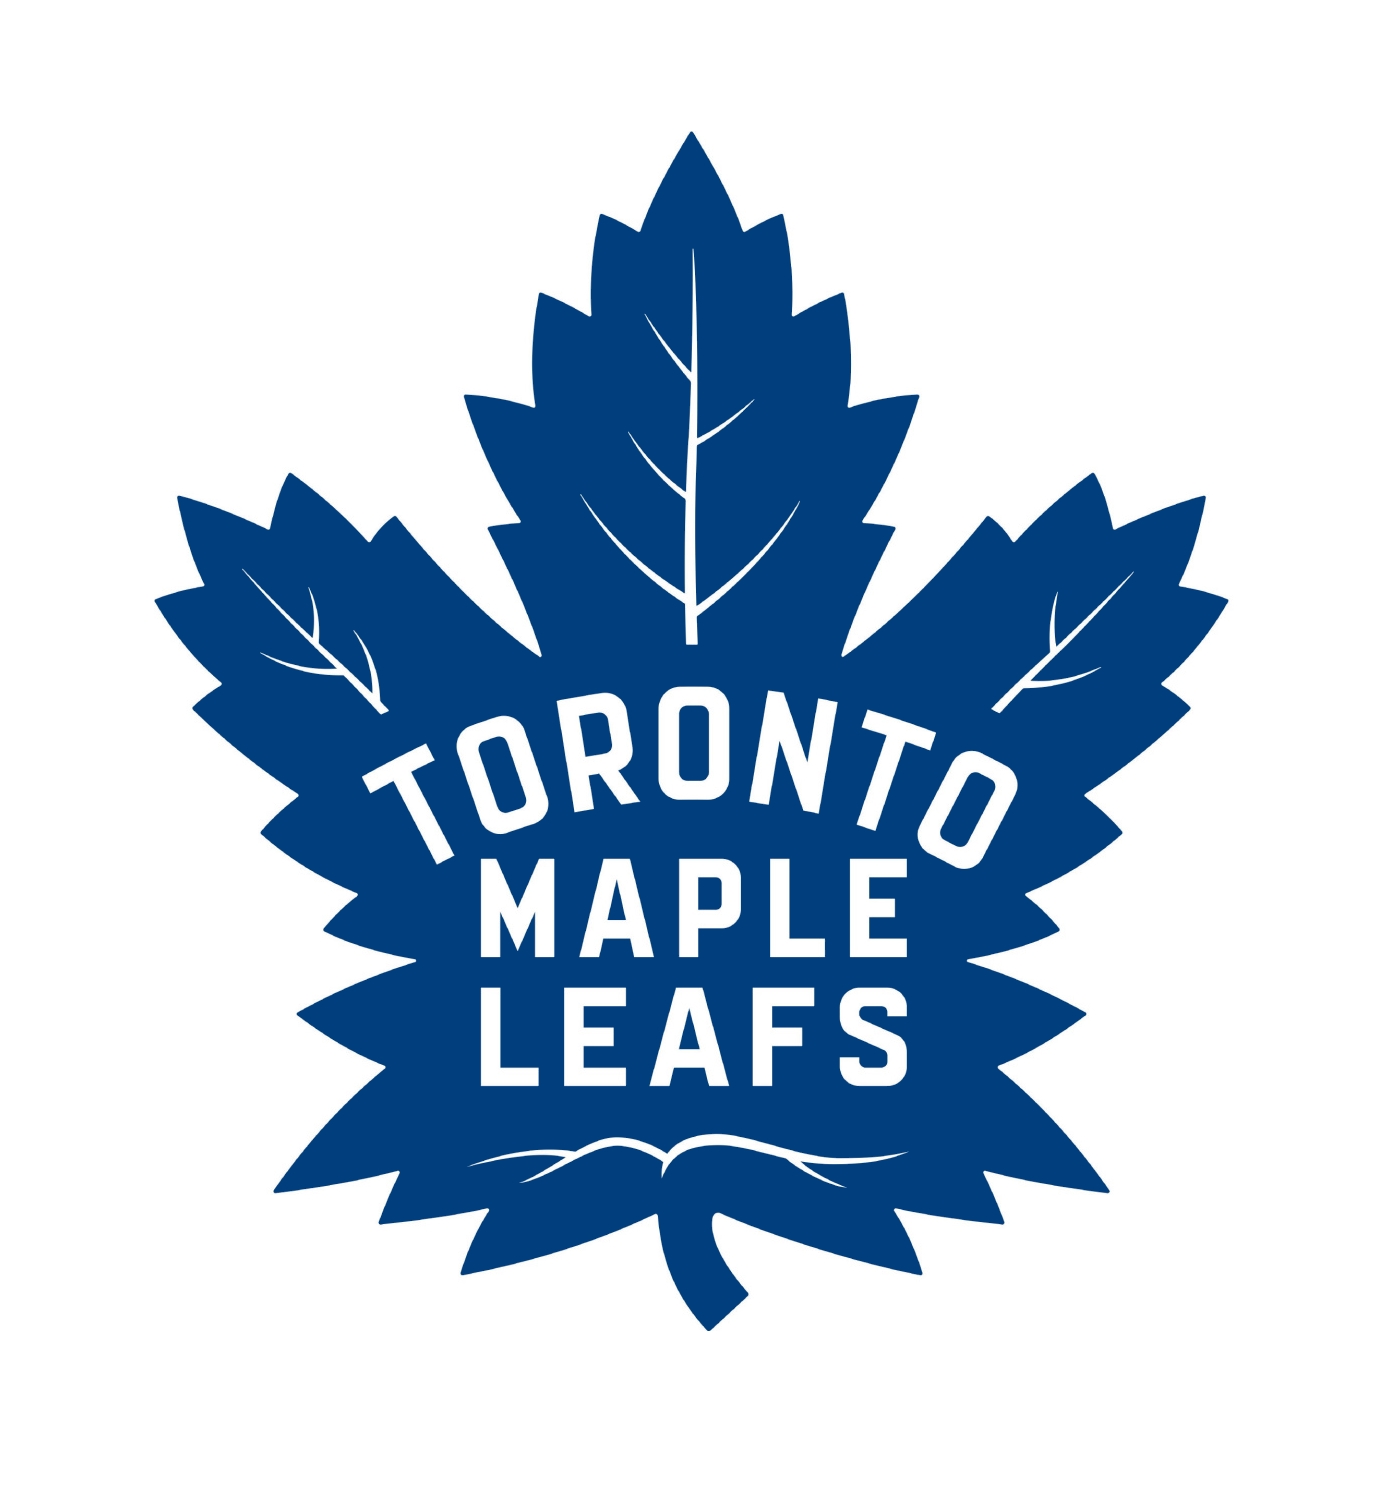 Toronto Maple Leafs Logos Download